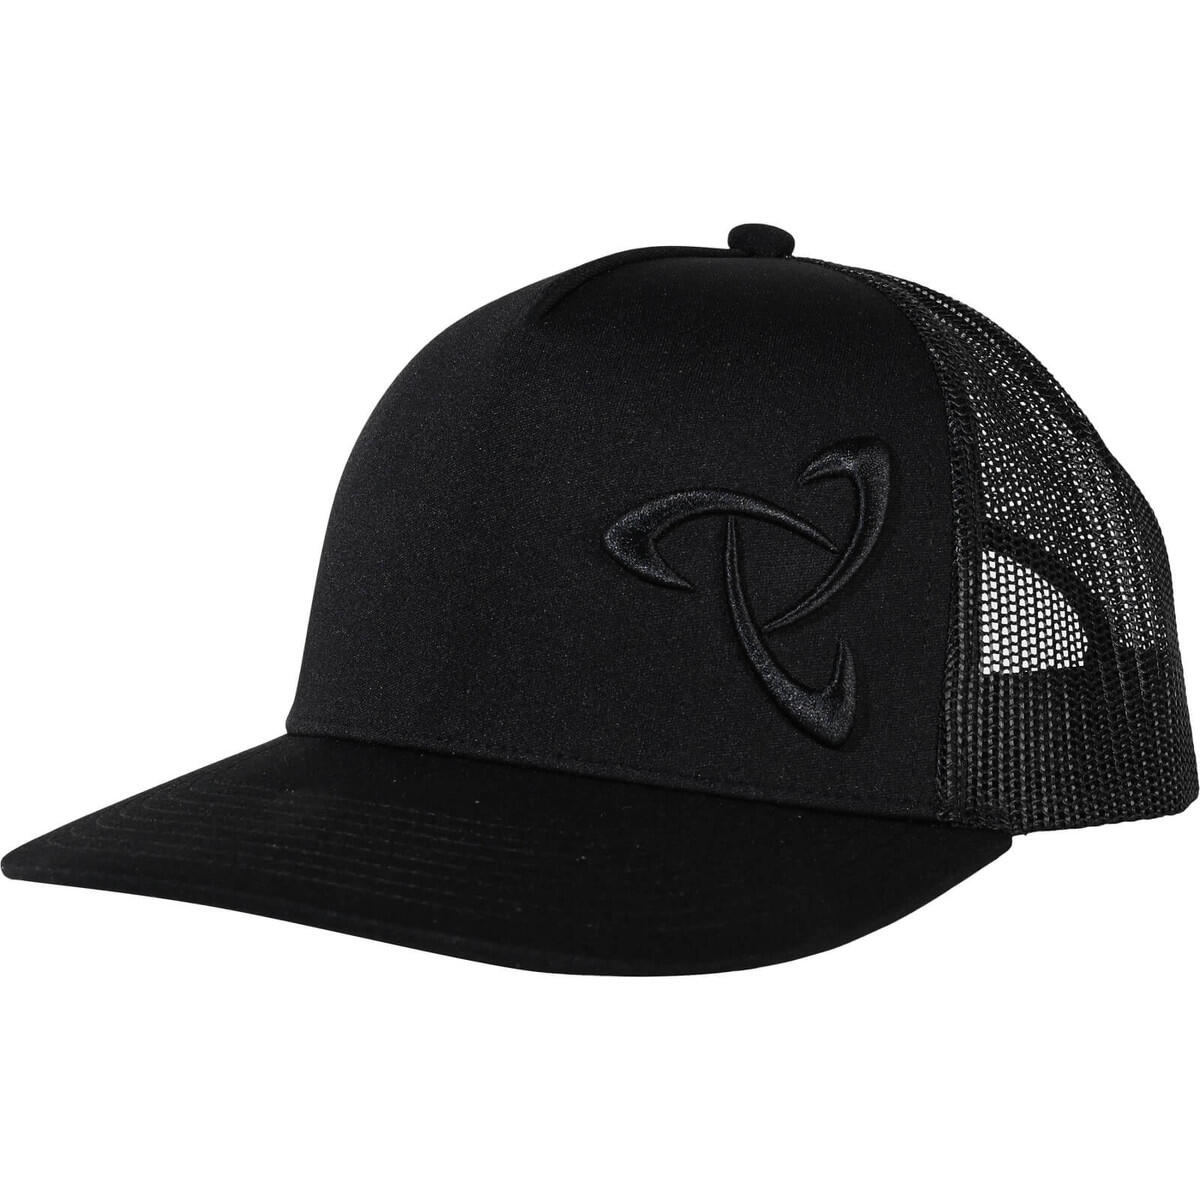 Spinner Trucker Hat baseball cap - Black - Decathlon